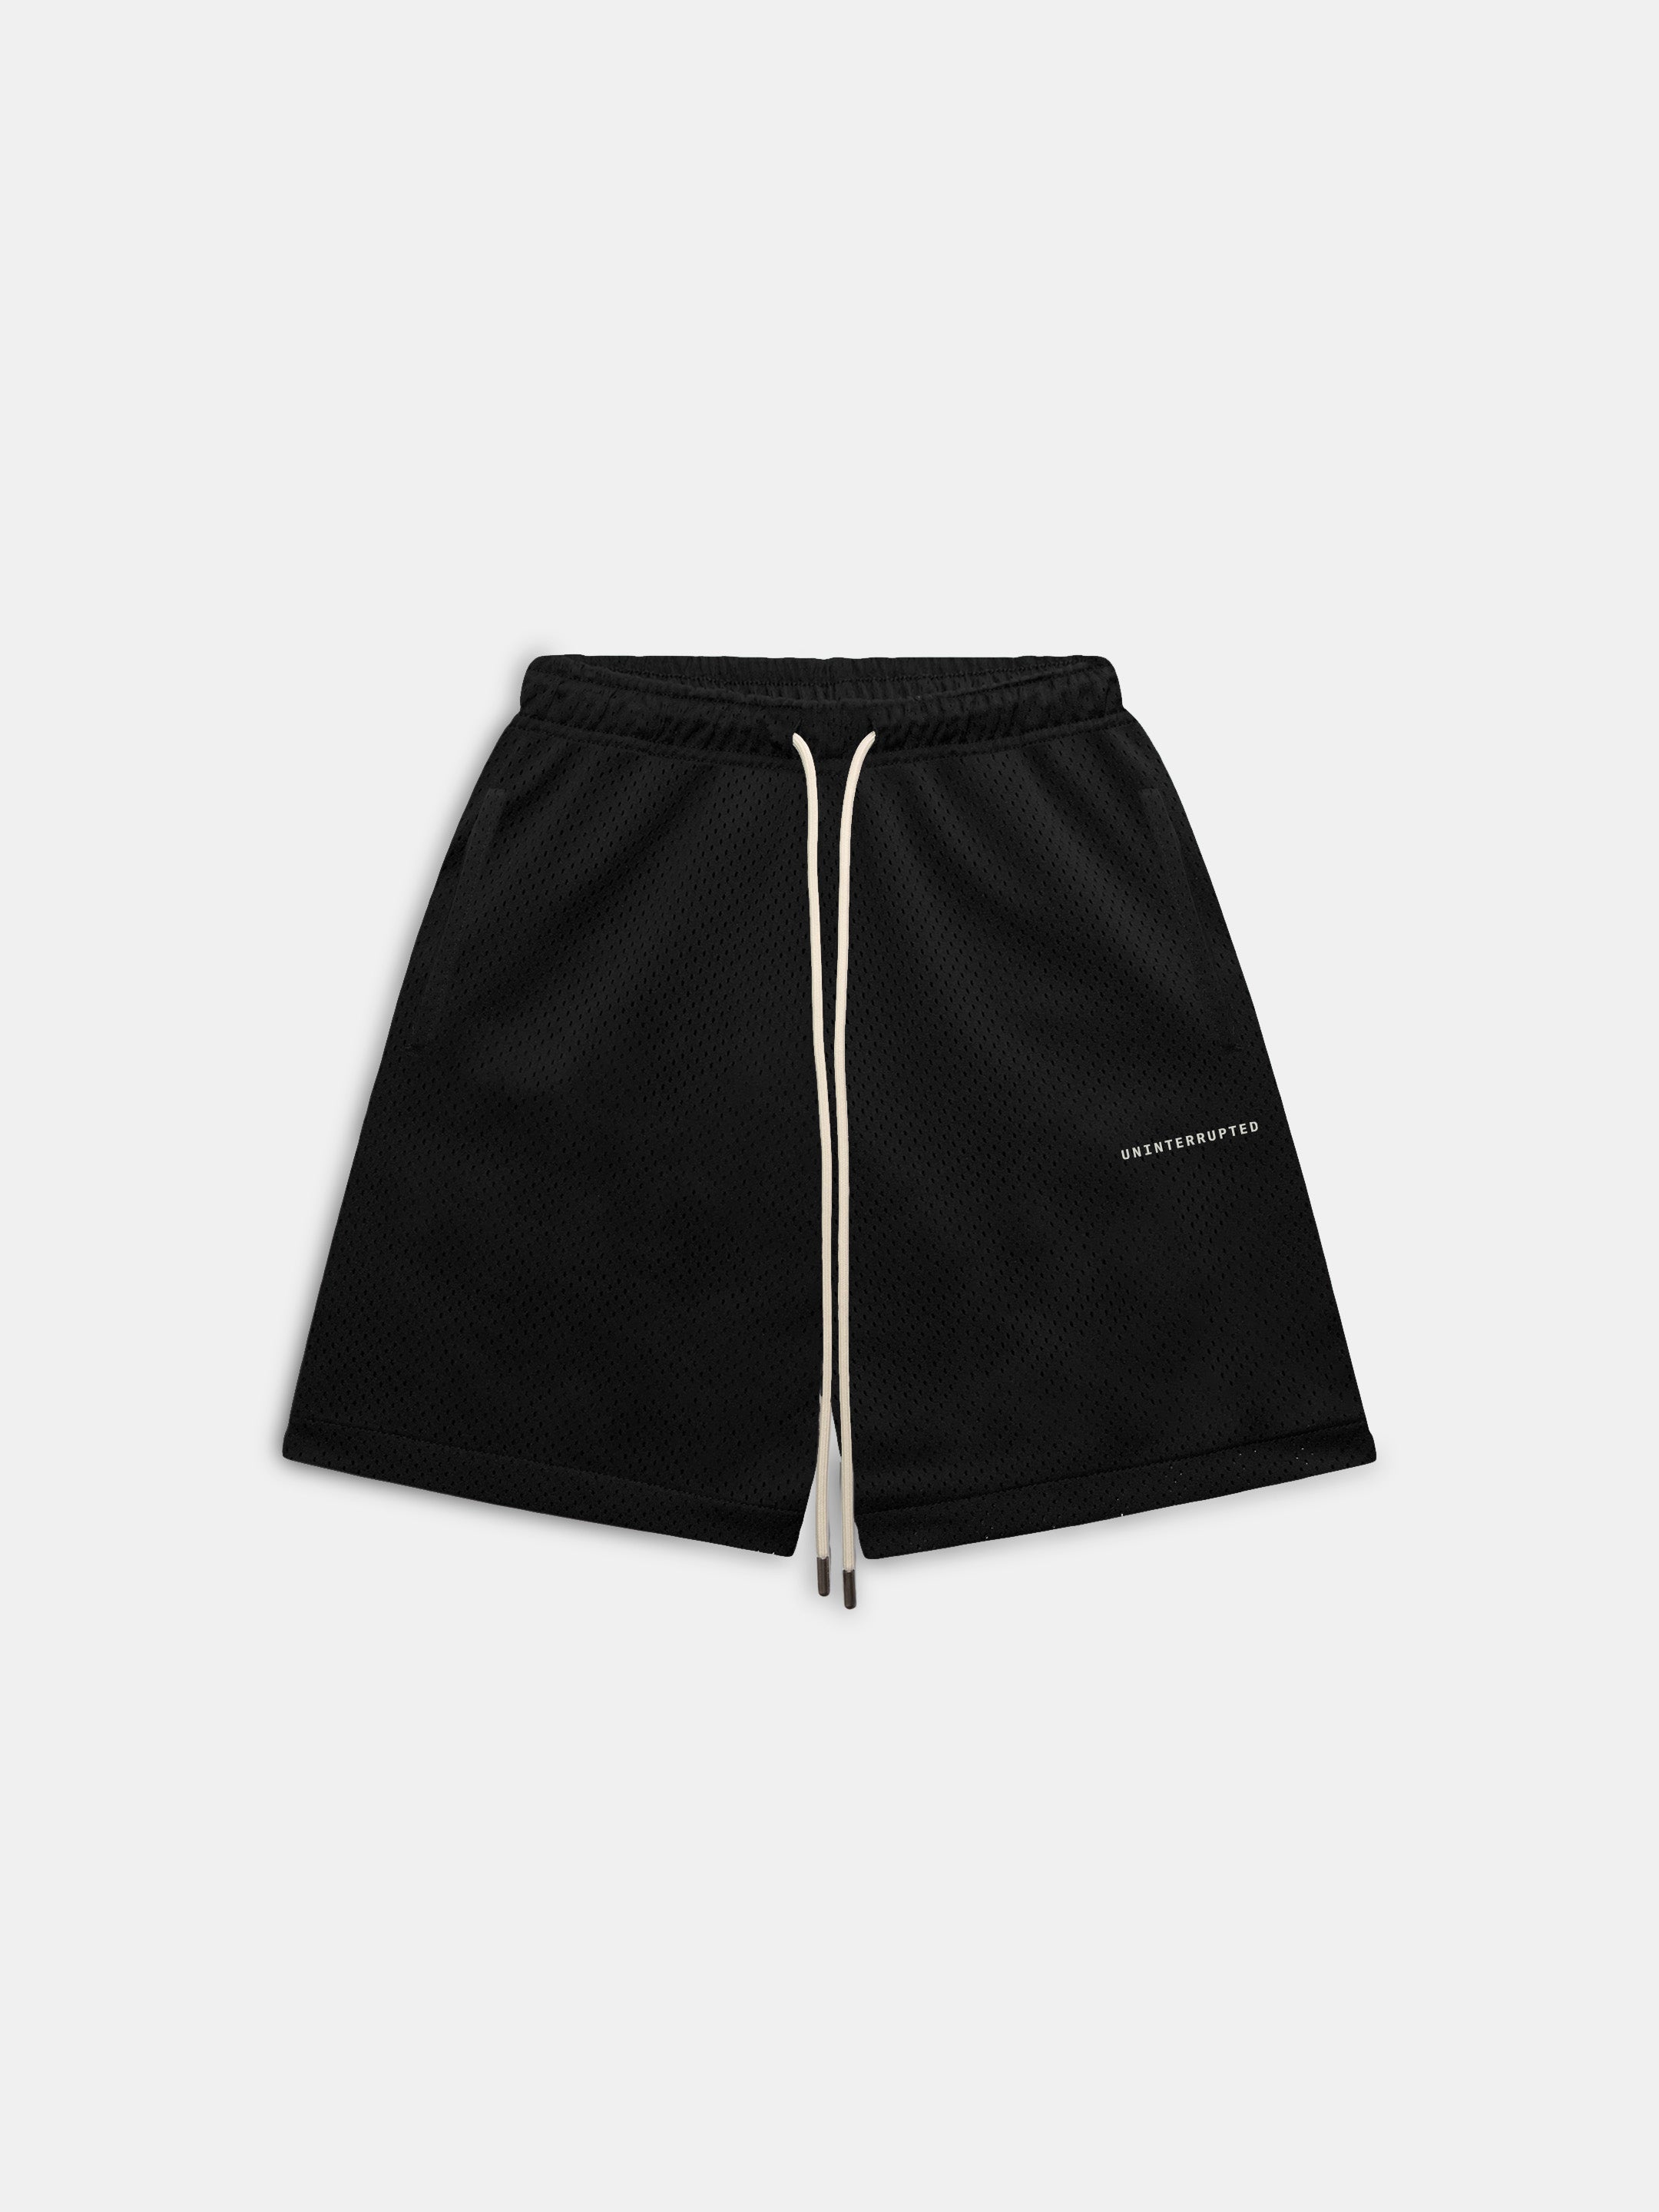 Fundamentals Mesh Shorts Black | UNINTERRUPTED® – Uninterrupted Store